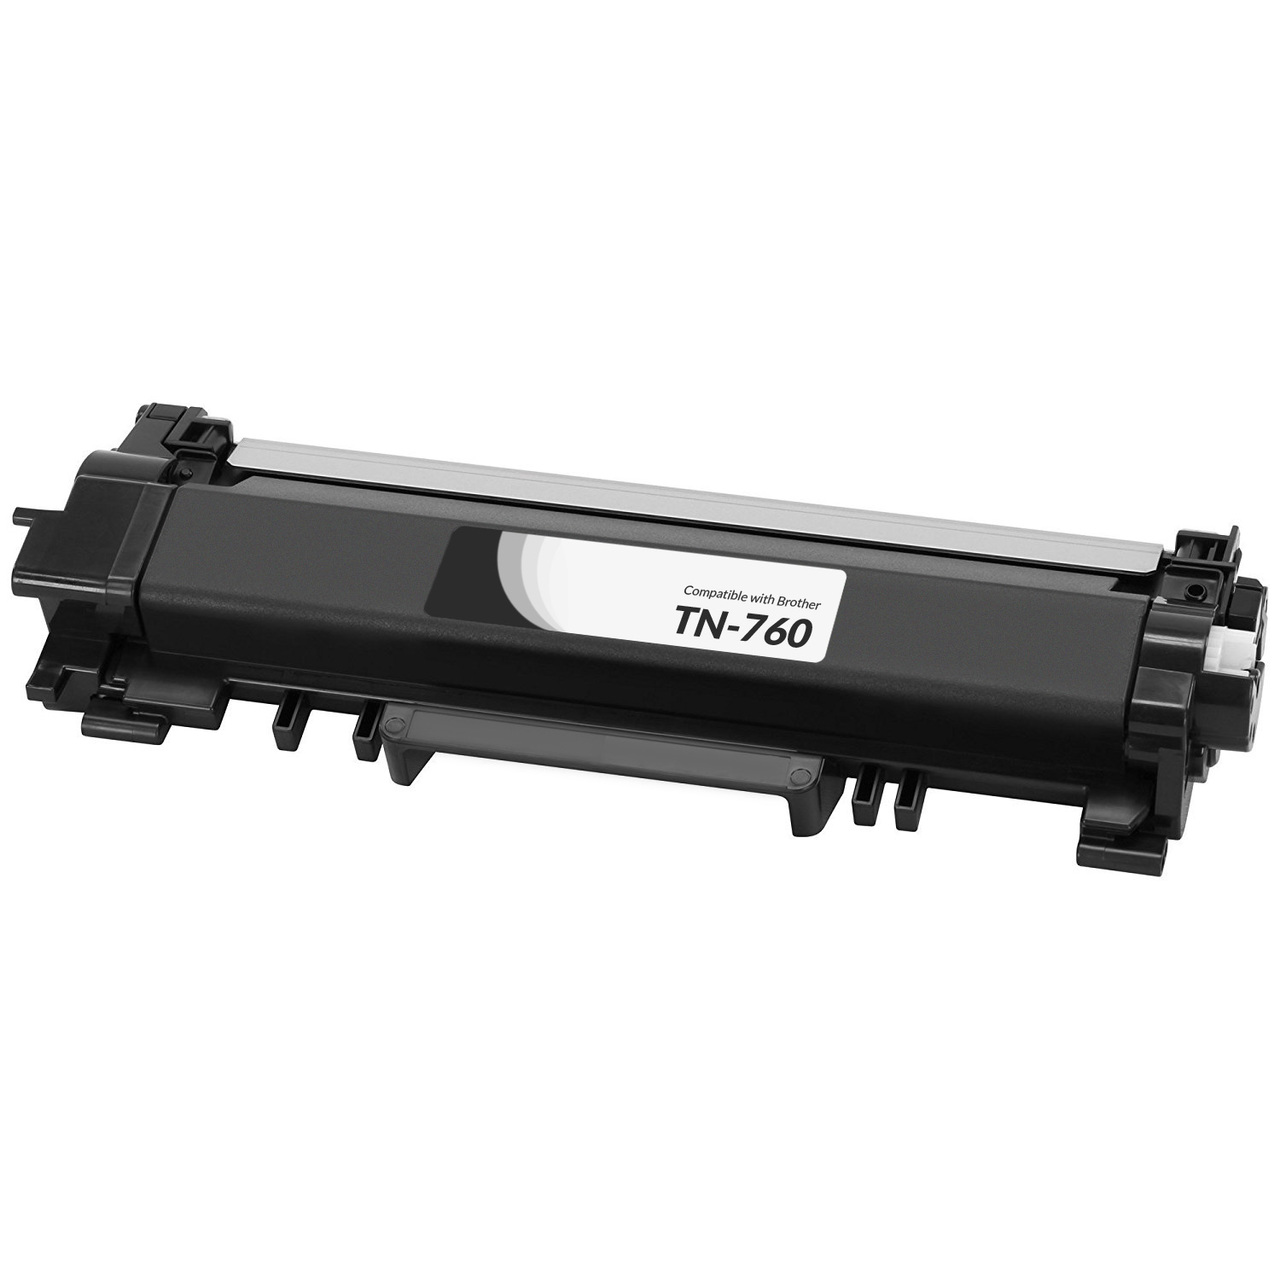 TN730/TN760 Toner: 2 Pack High Yield Black Compatible Toner